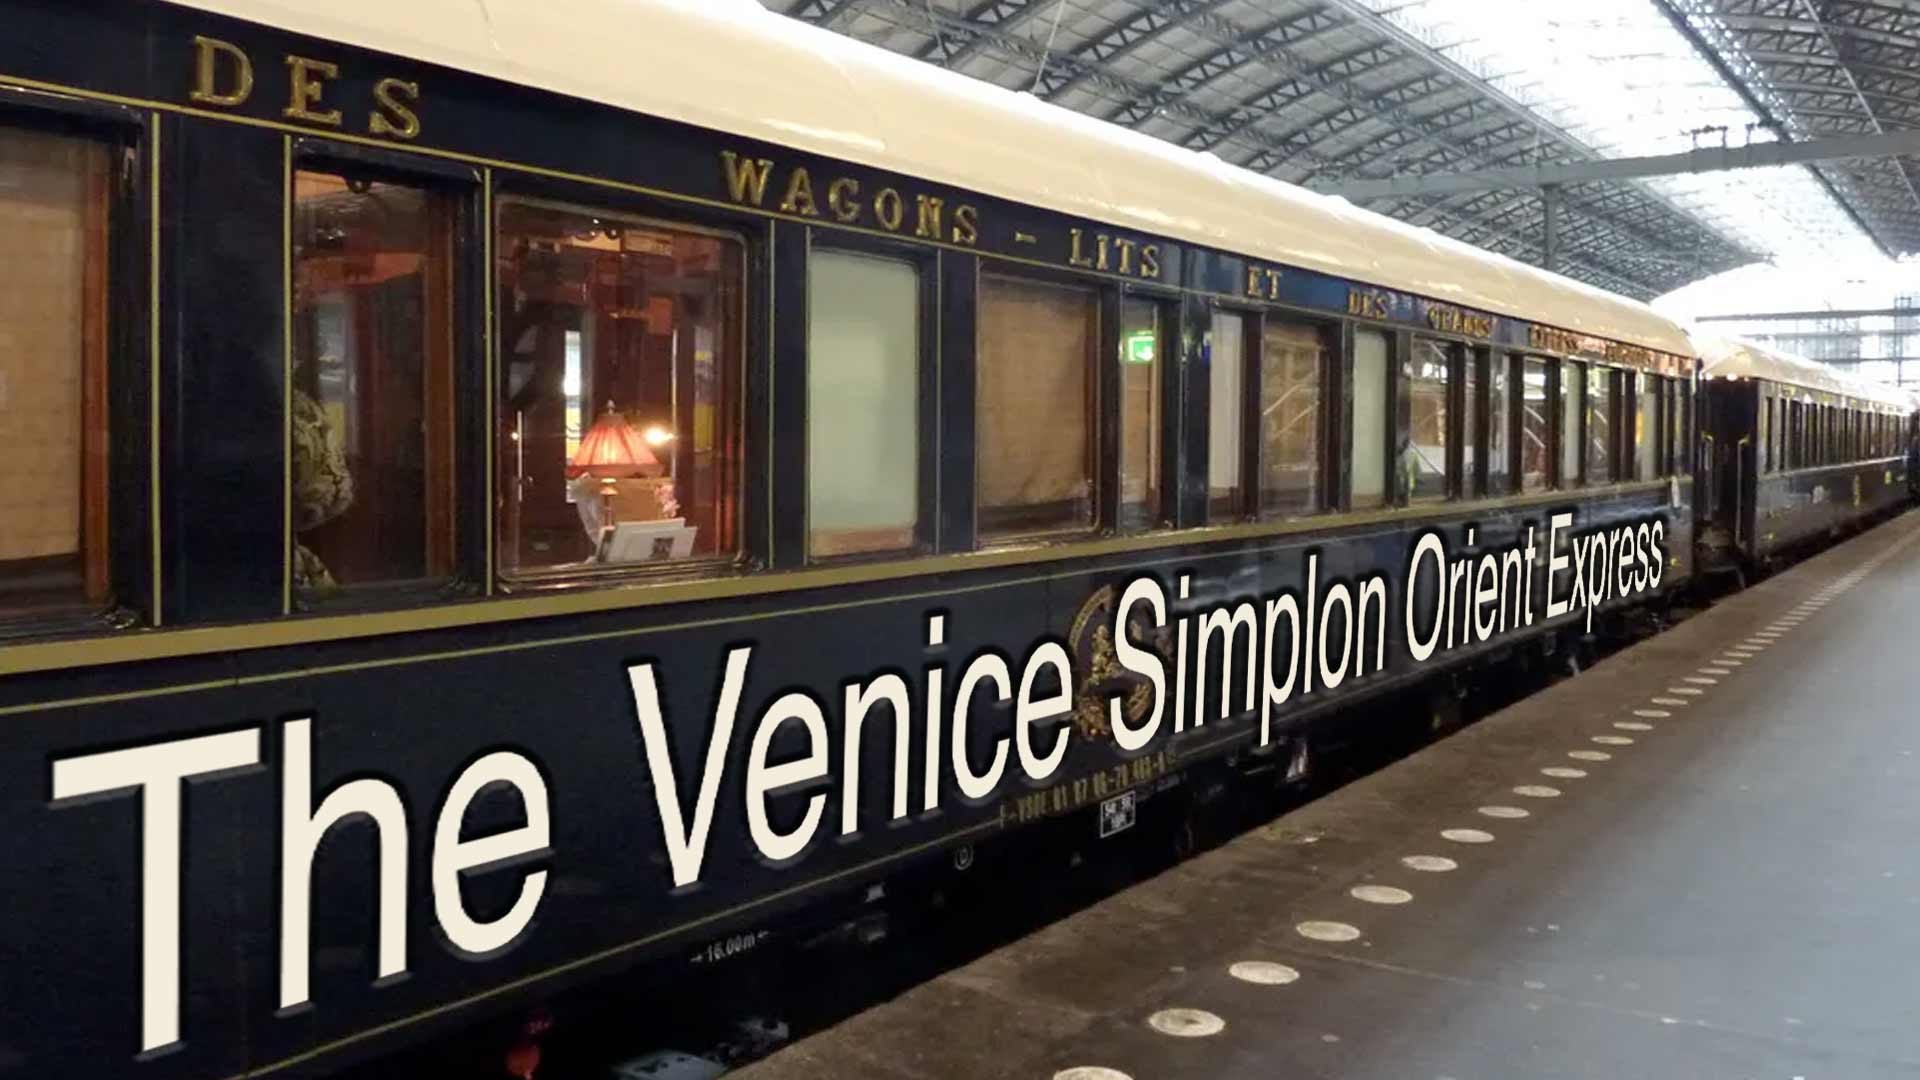 The Venice – Simplon Orient Express